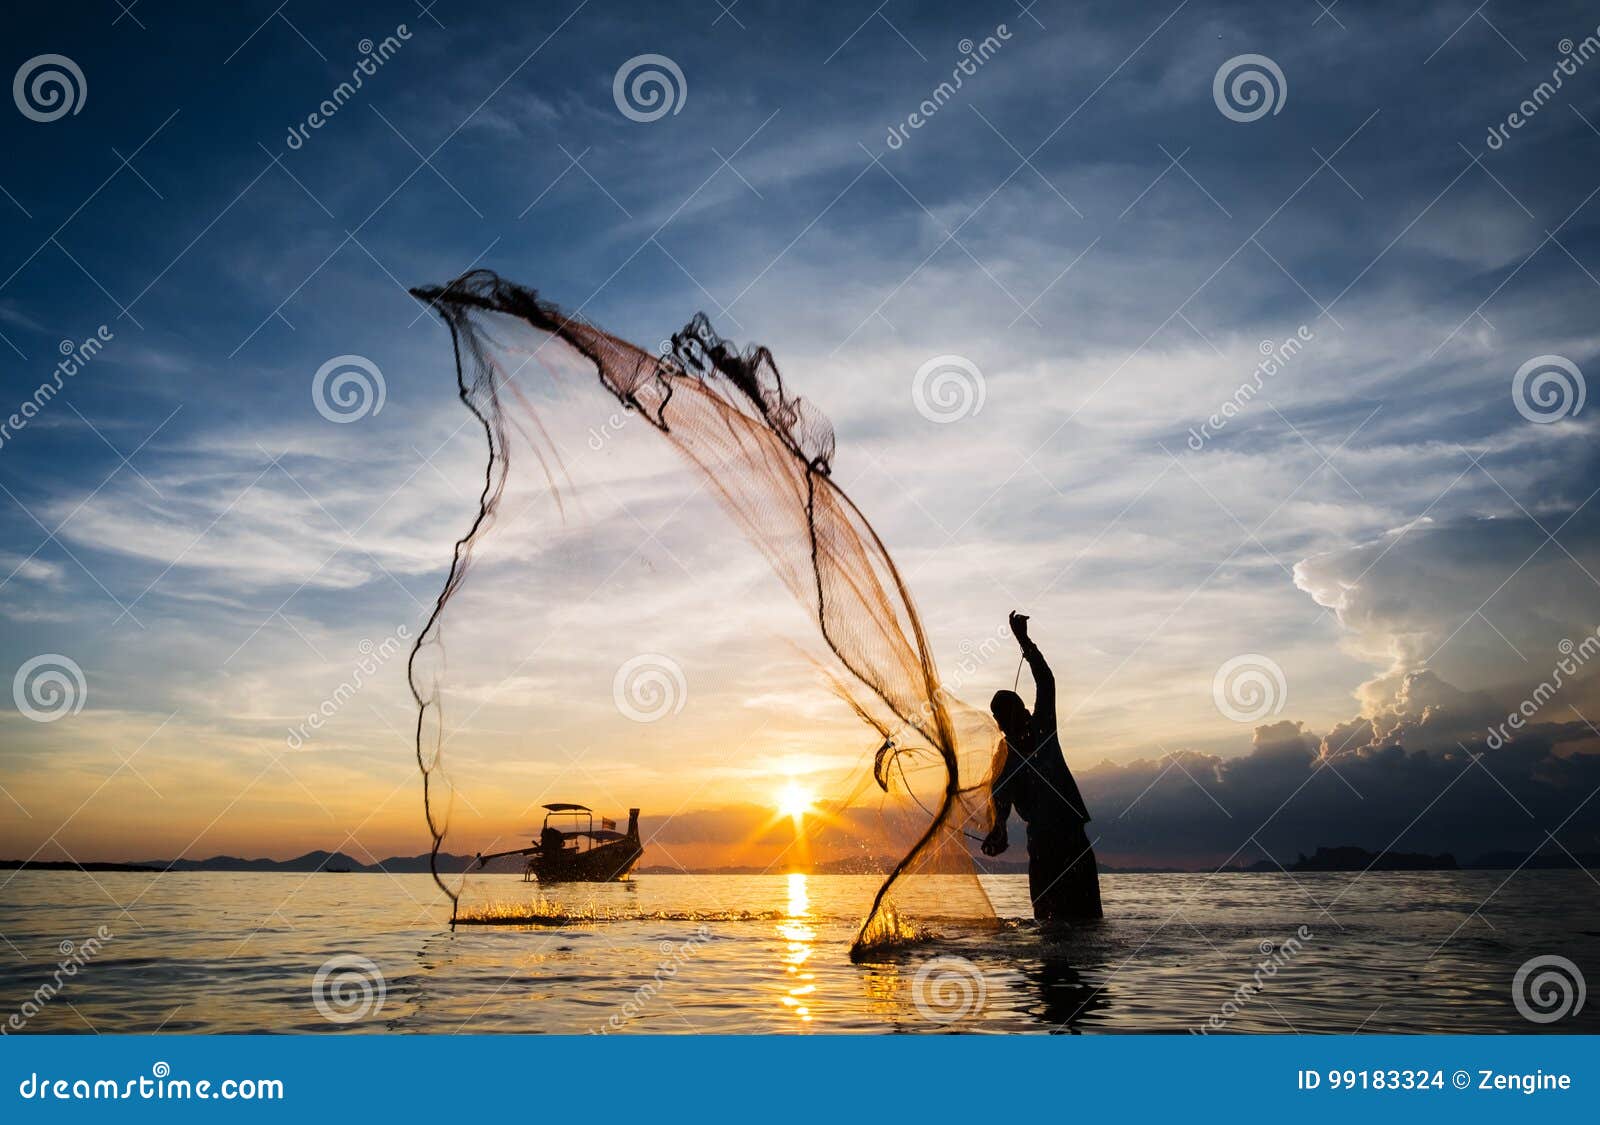 23,887 Fisherman Silhouette Sunset Stock Photos - Free & Royalty